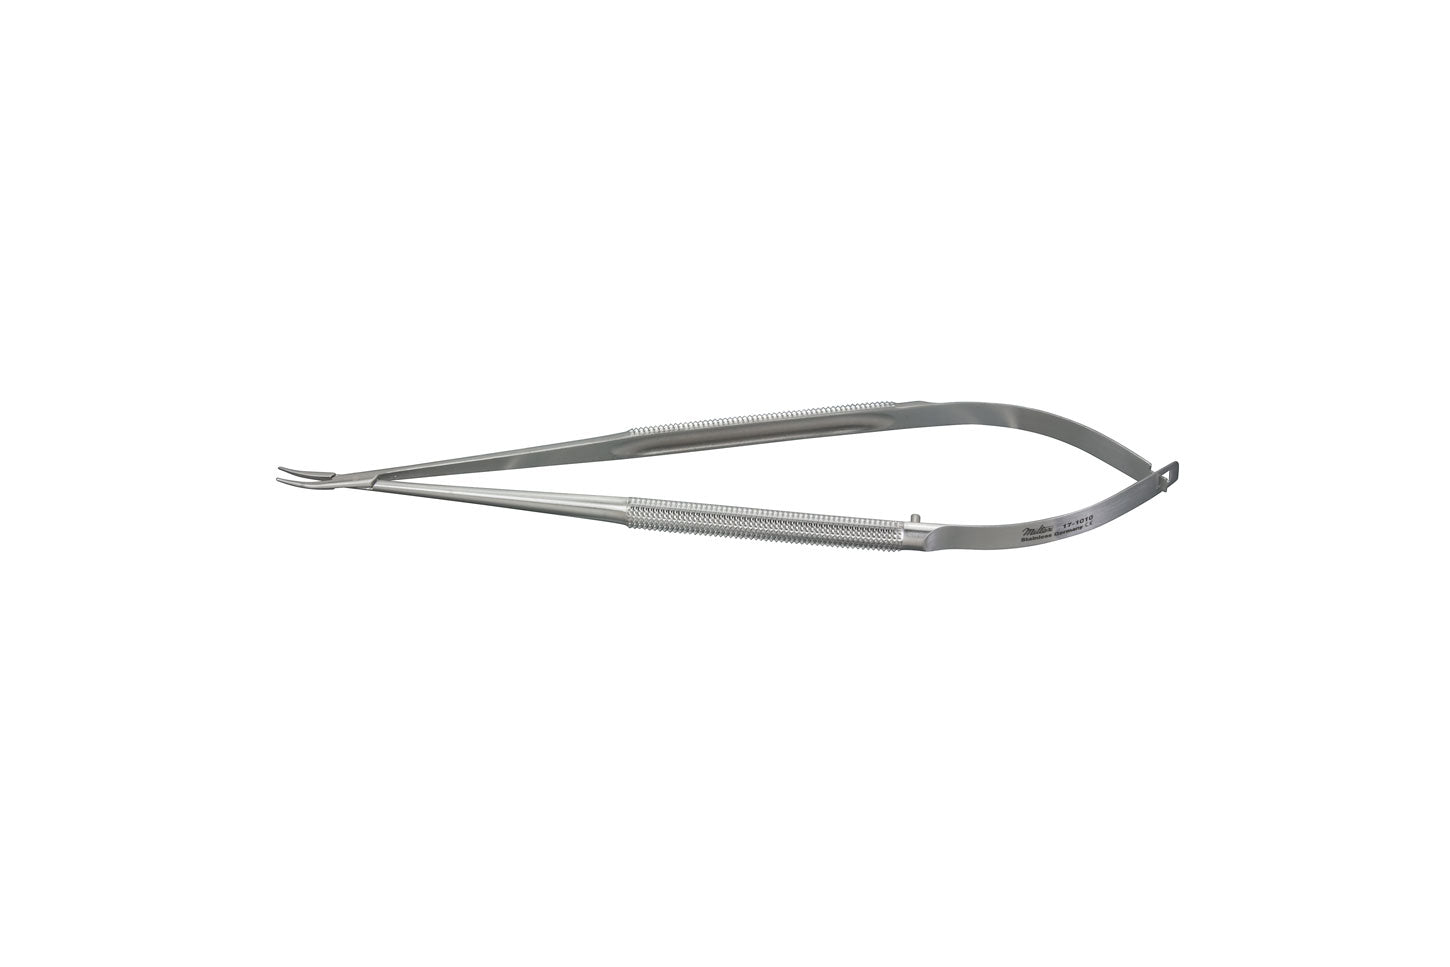  Microsurgery Needle Holder 